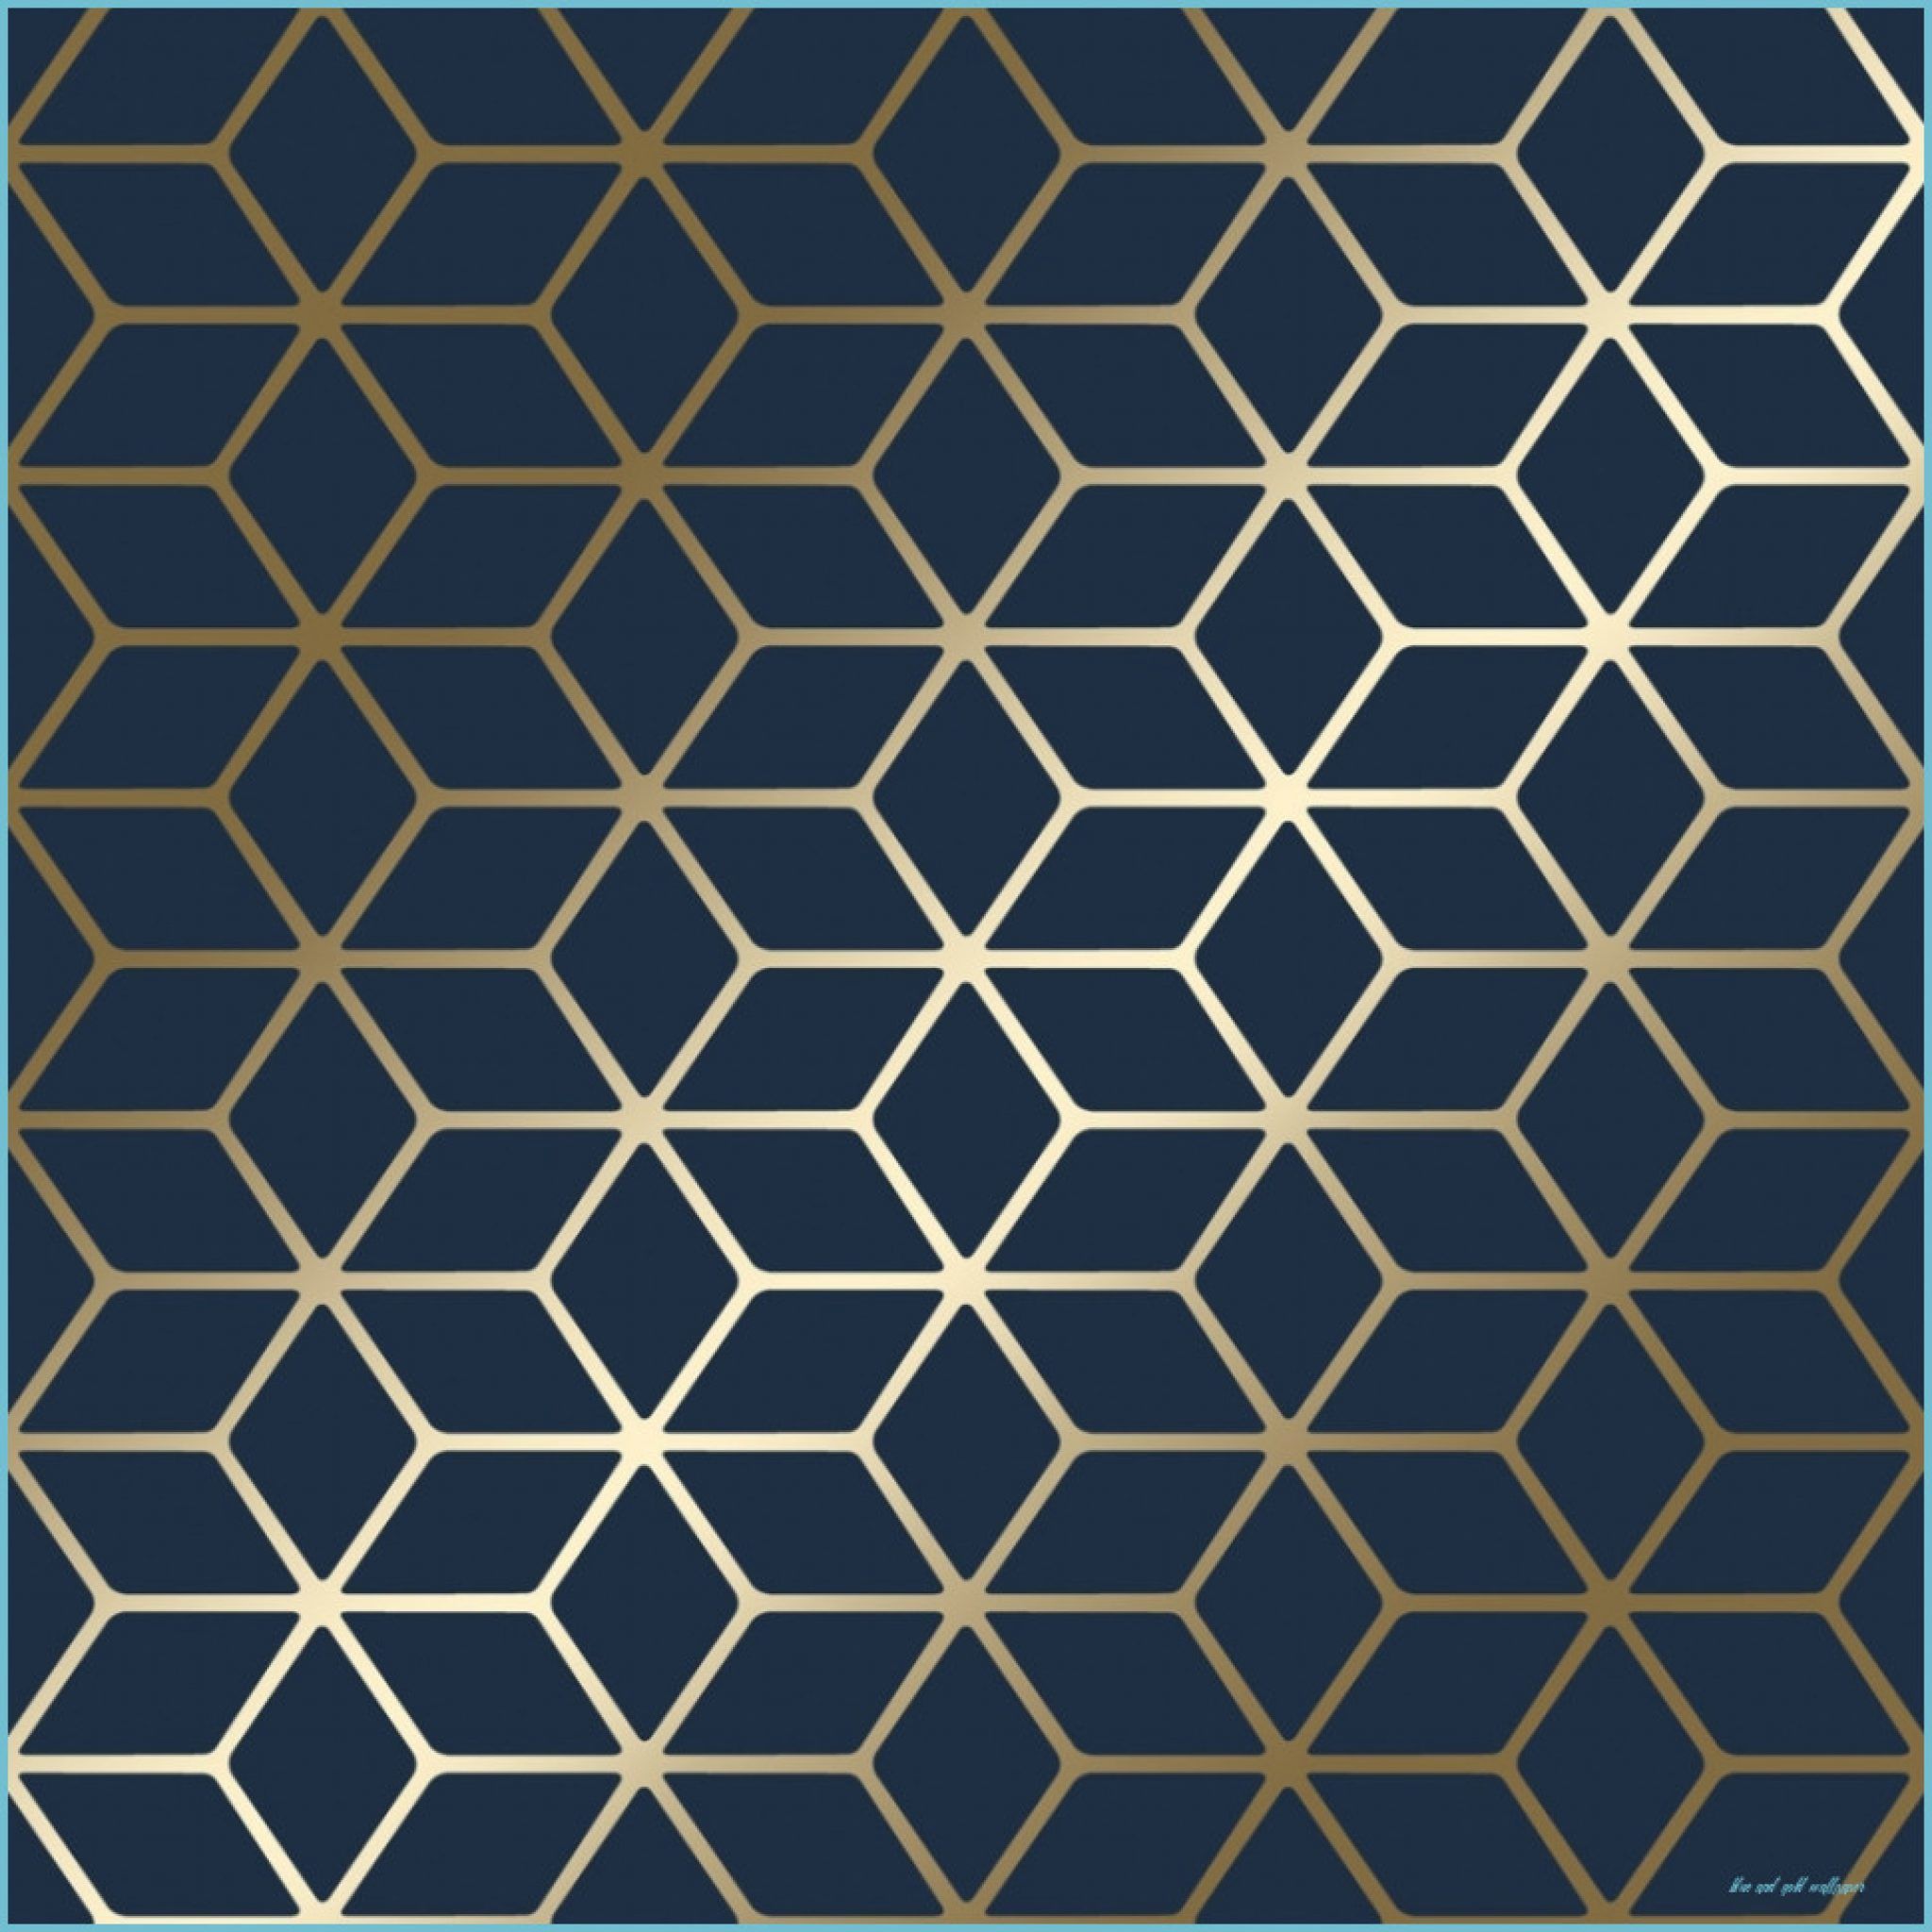 Cubic Shimmer Metallic Wallpaper Navy Blue, Gold and gold wallpaper